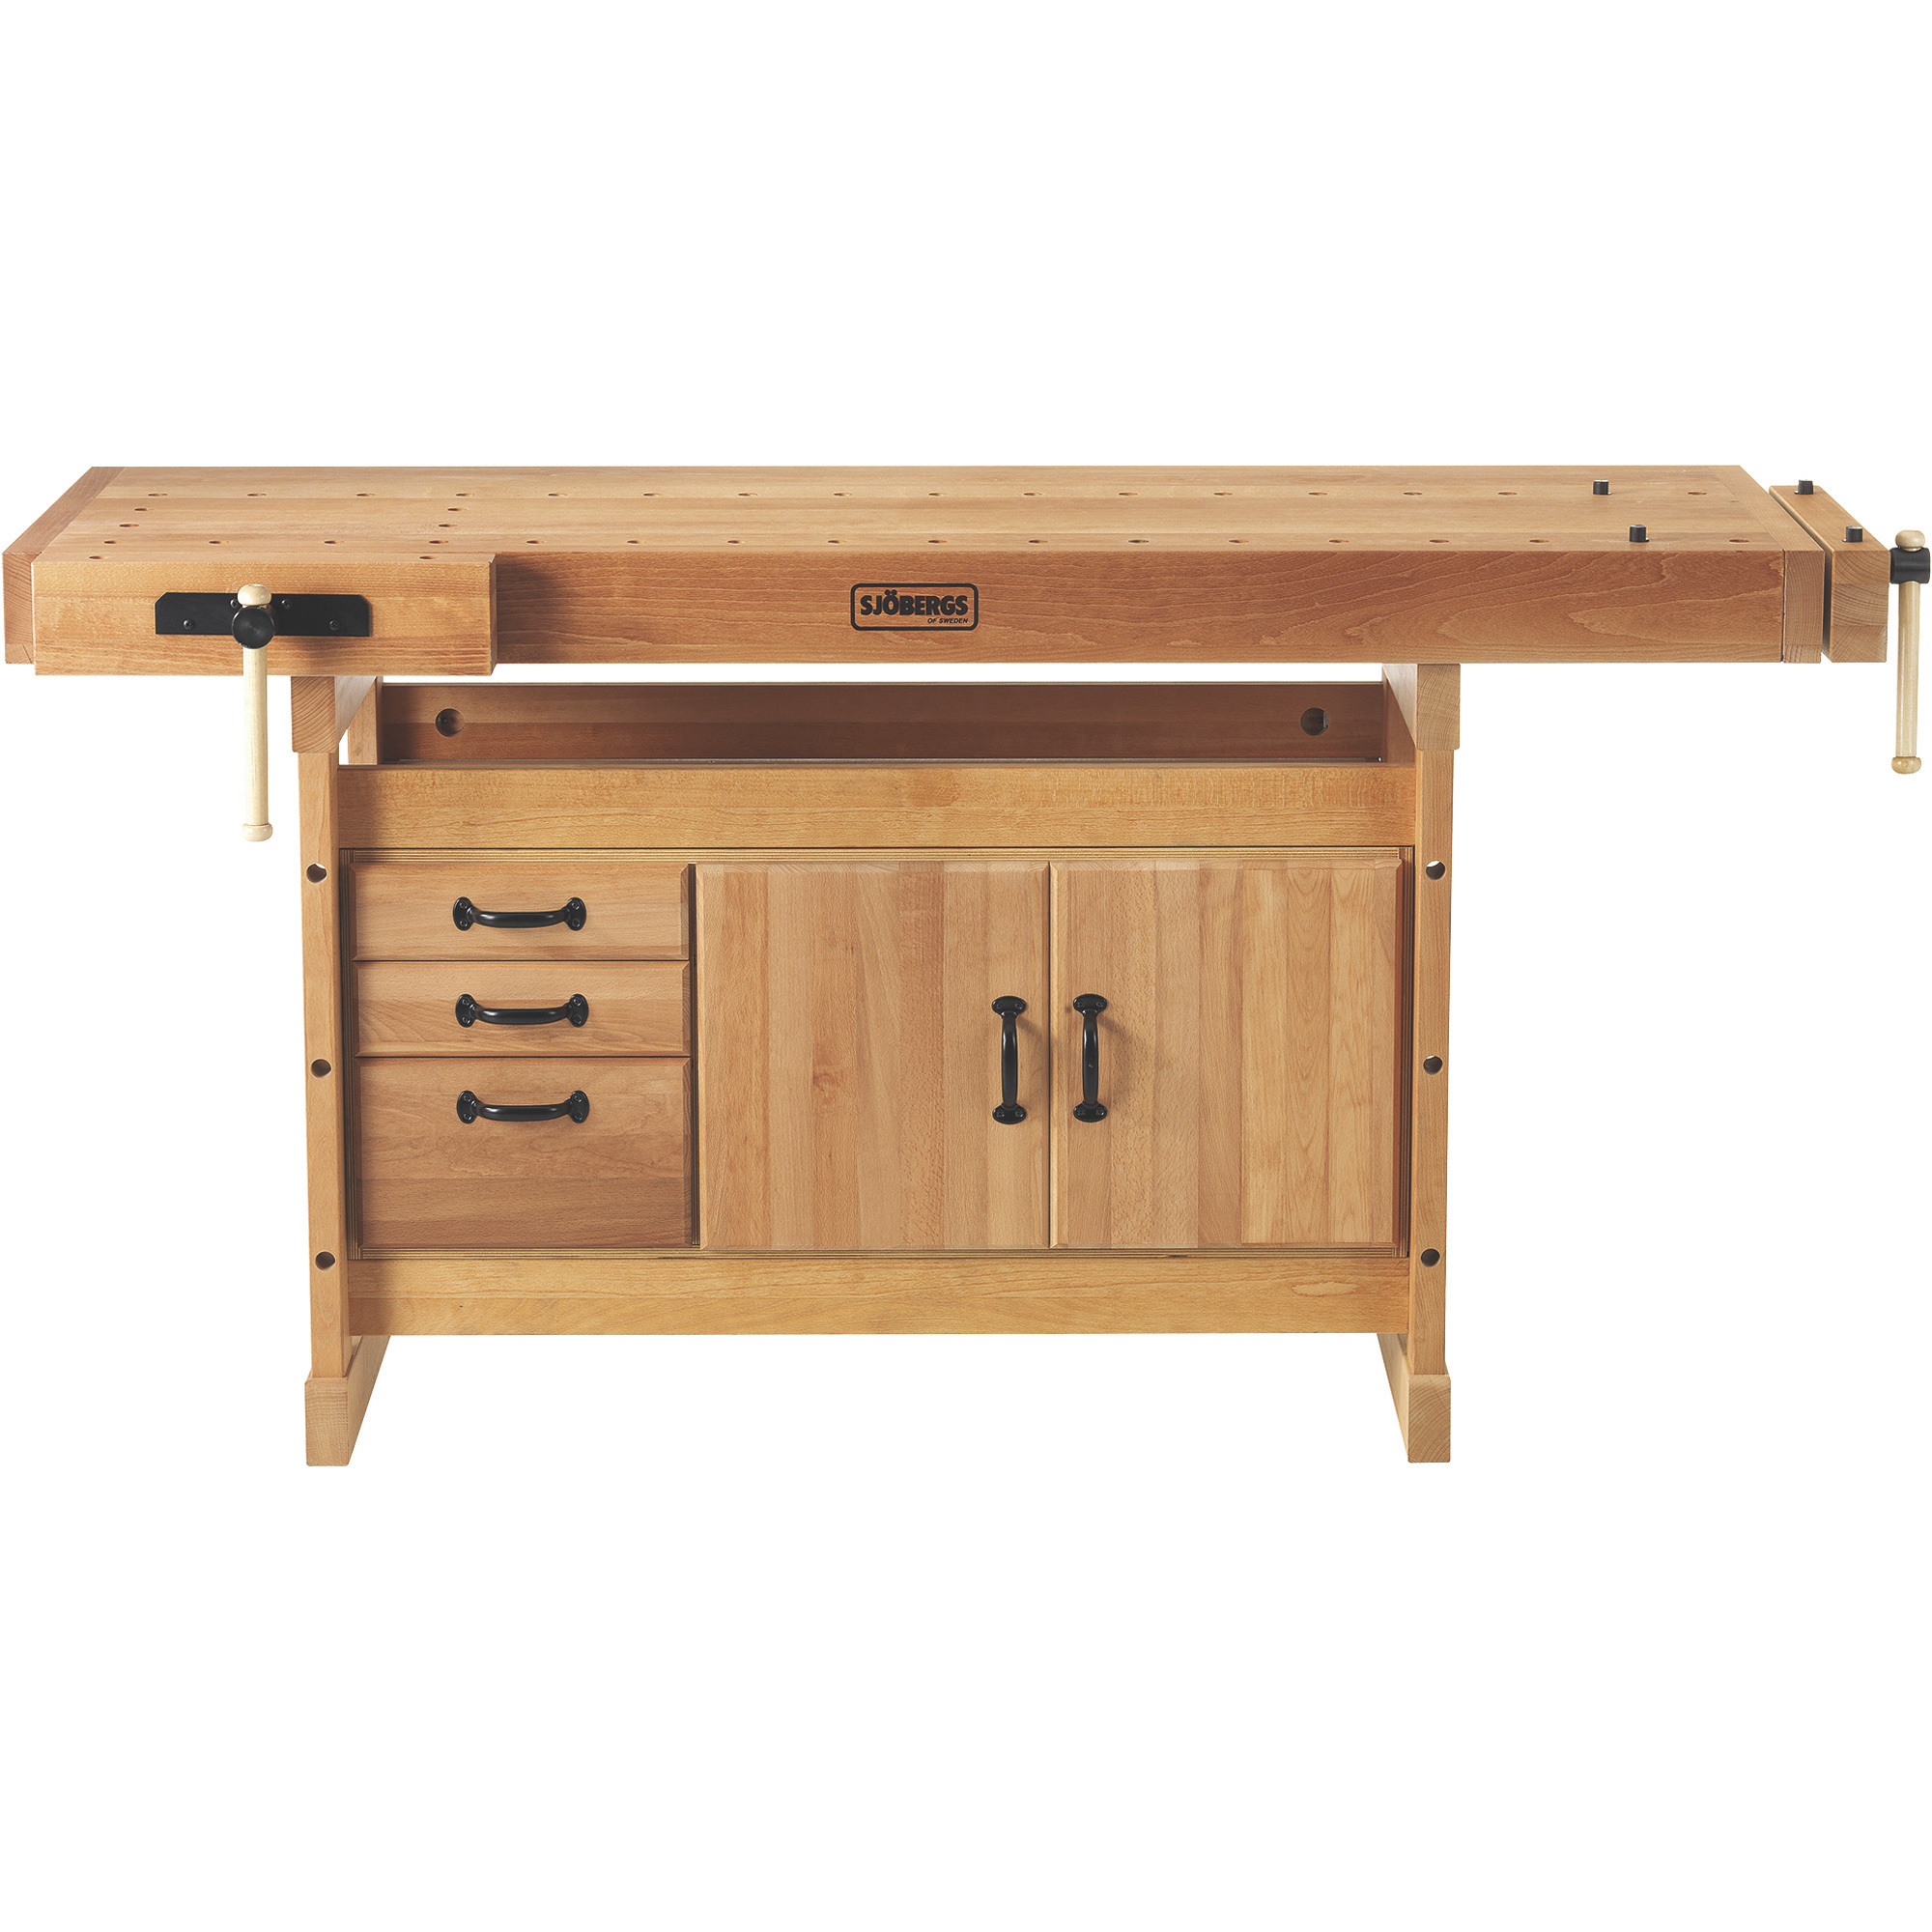 Sjobergs Scandi Plus 1425 Cabinet 57 7/8inW 814000013232 | eBay and Wood Workbench